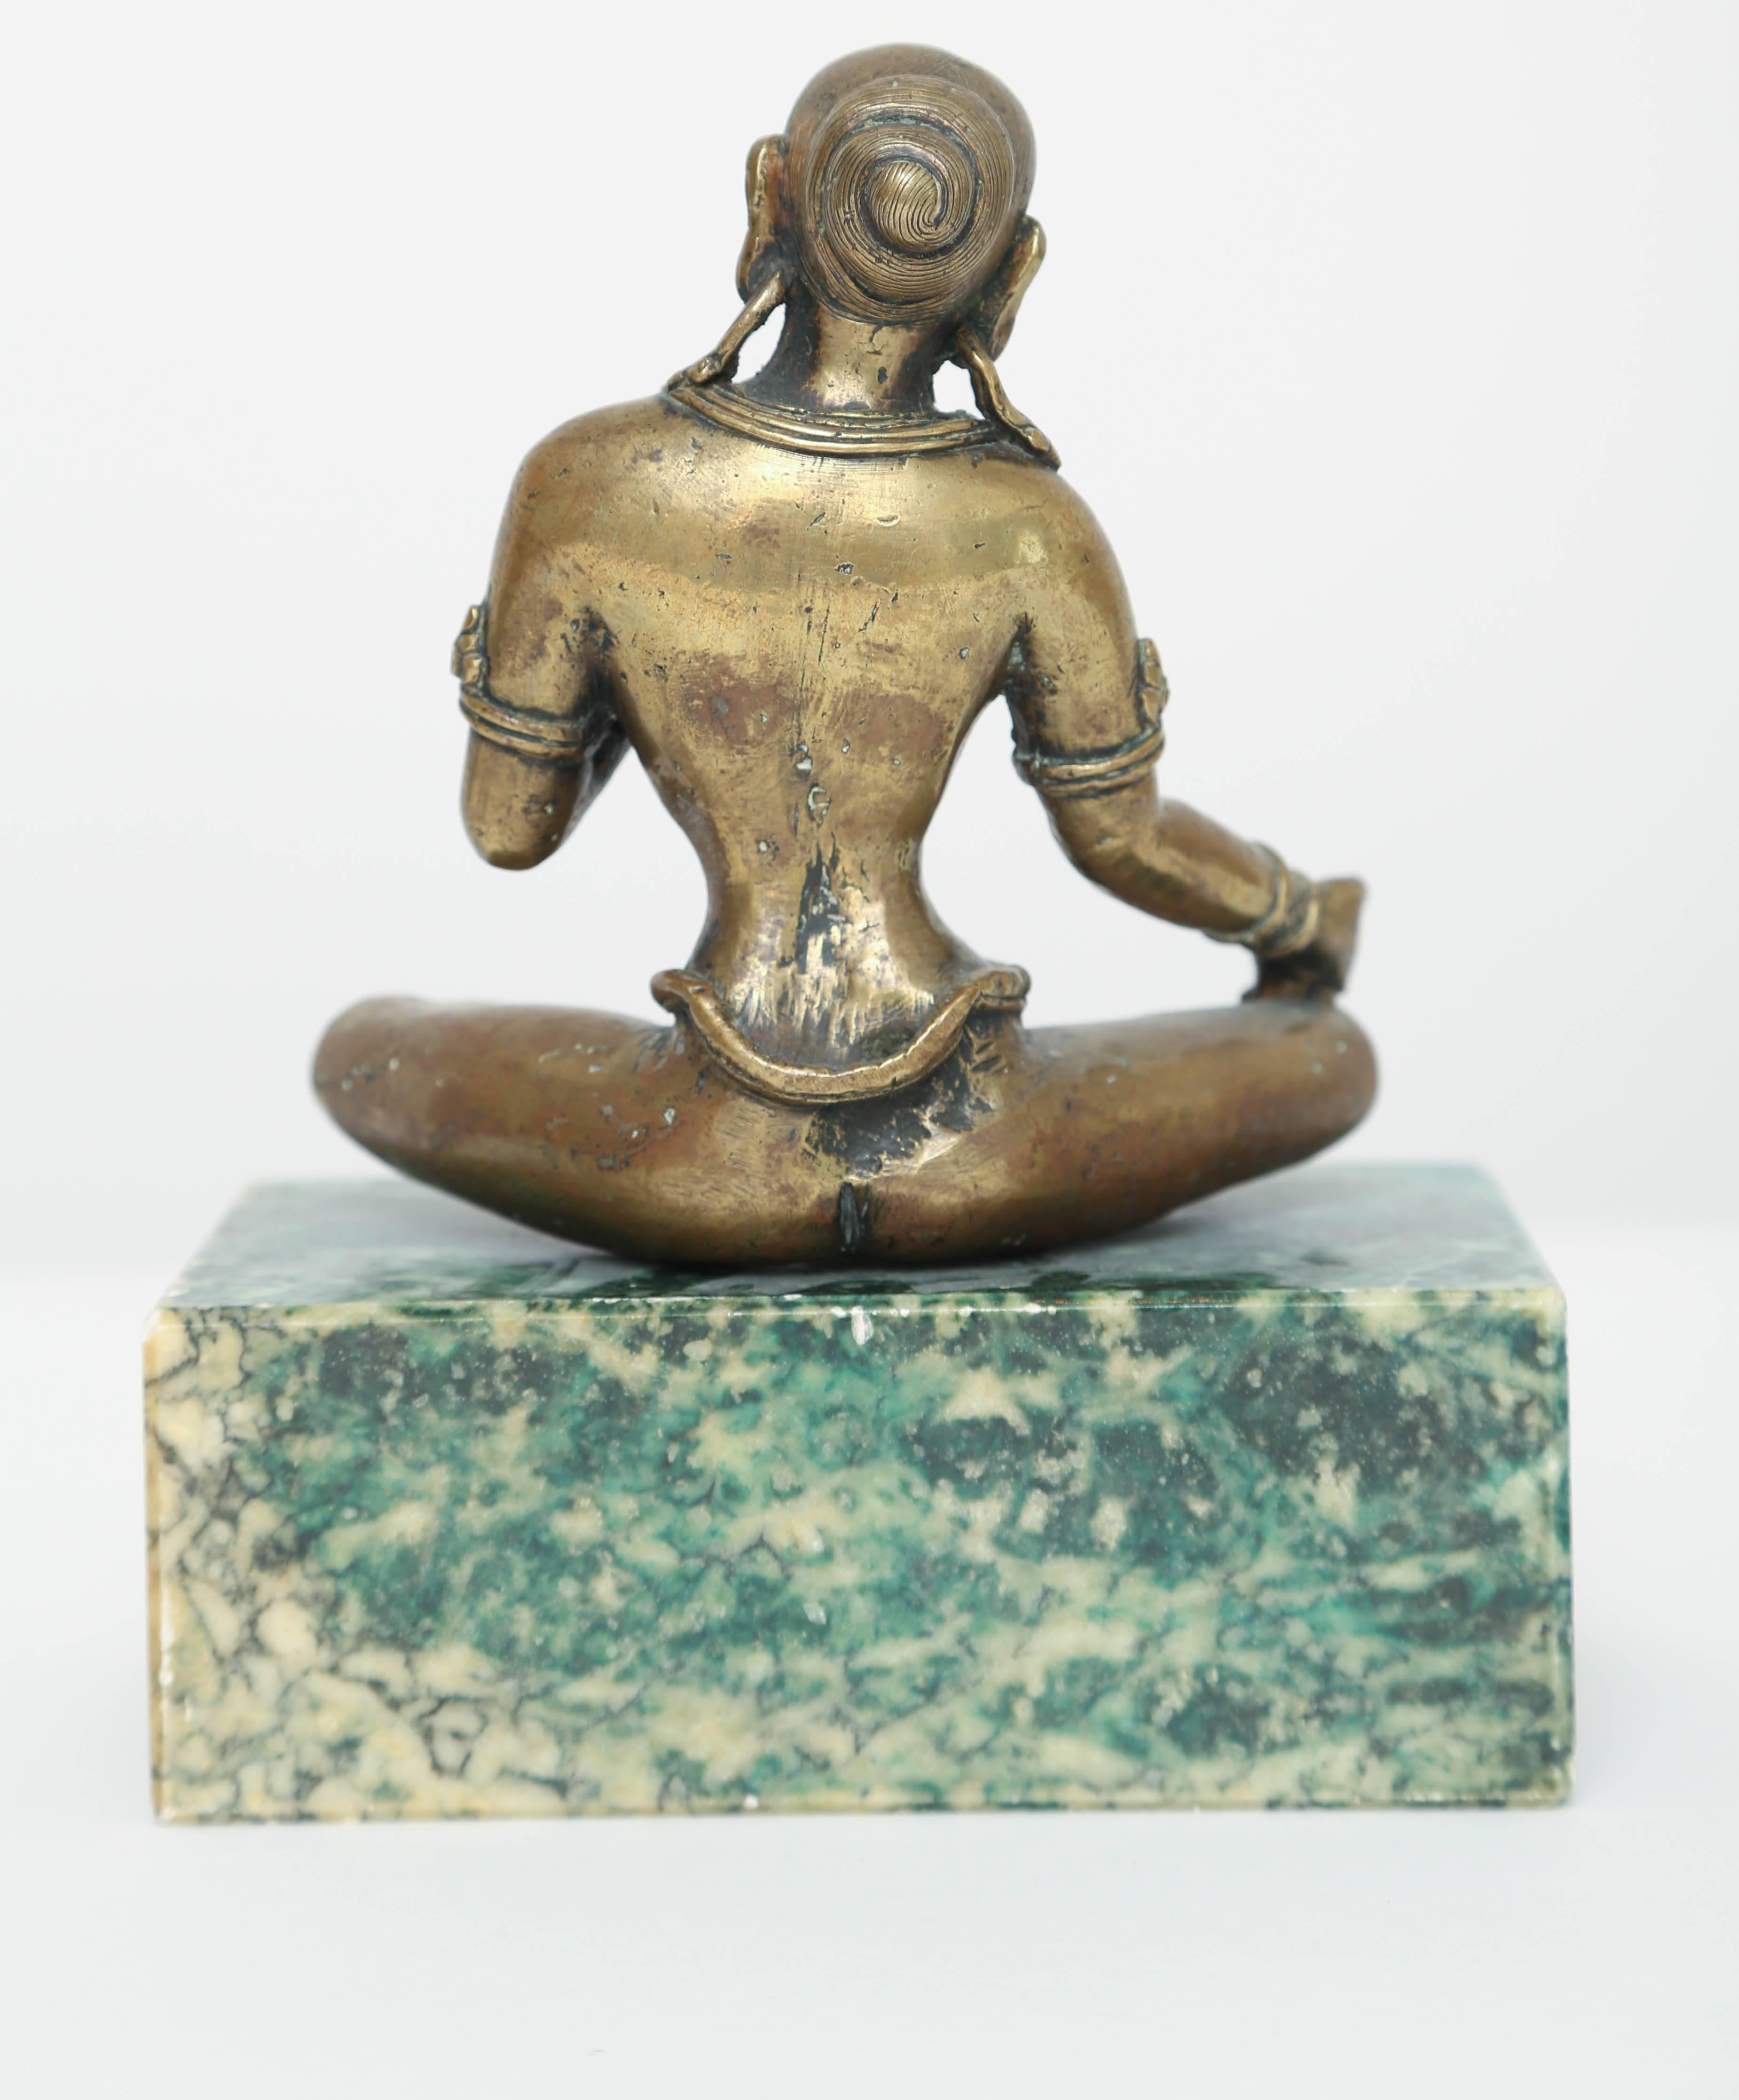 Cast Bronze Figure of the Seated Goddess Tara, India, 19th Century